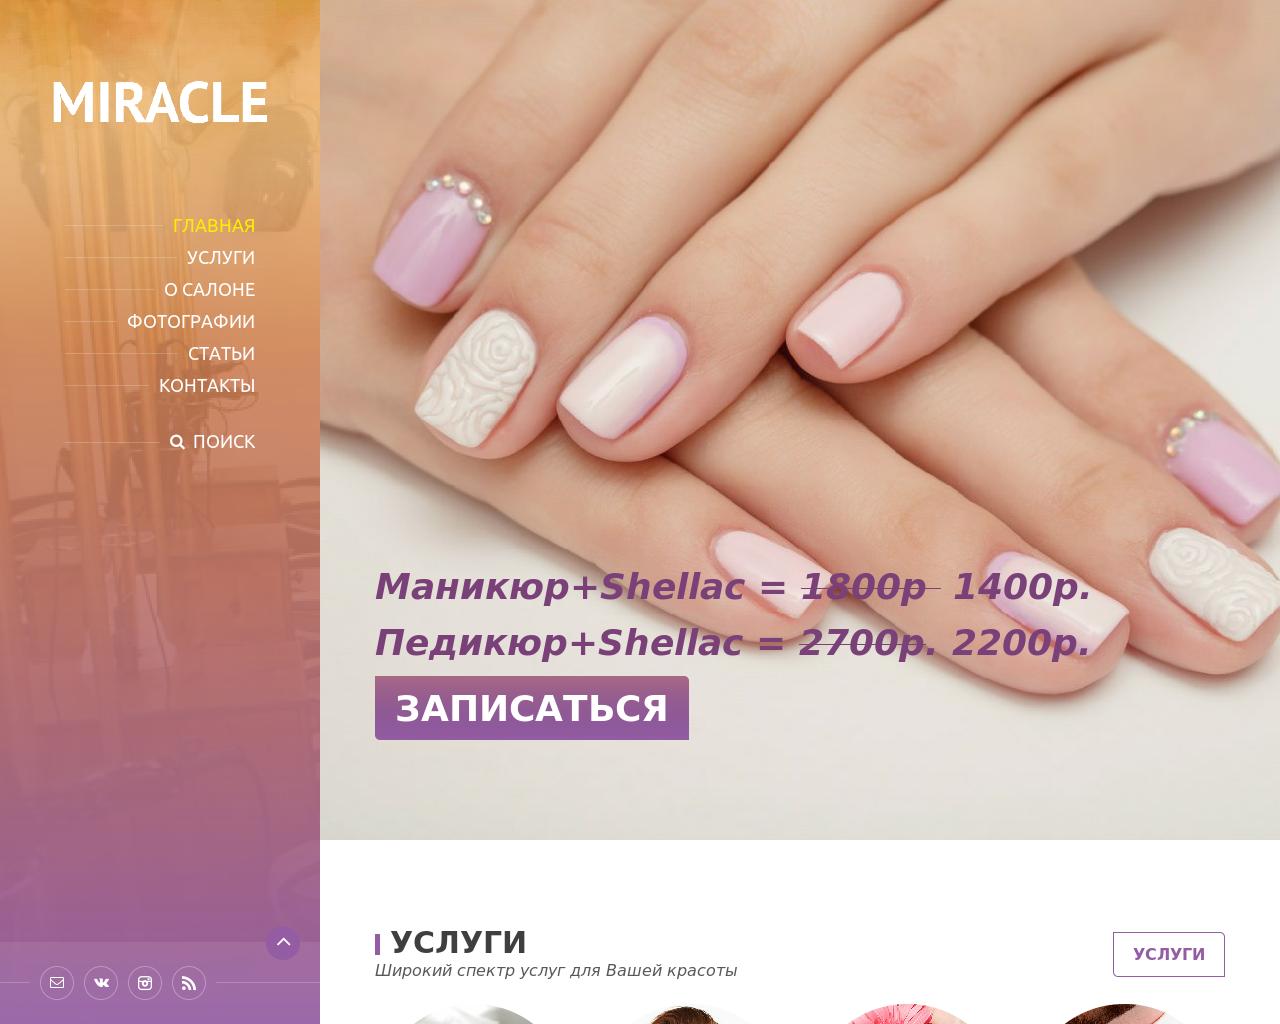 Изображение сайта justmiracle.ru в разрешении 1280x1024